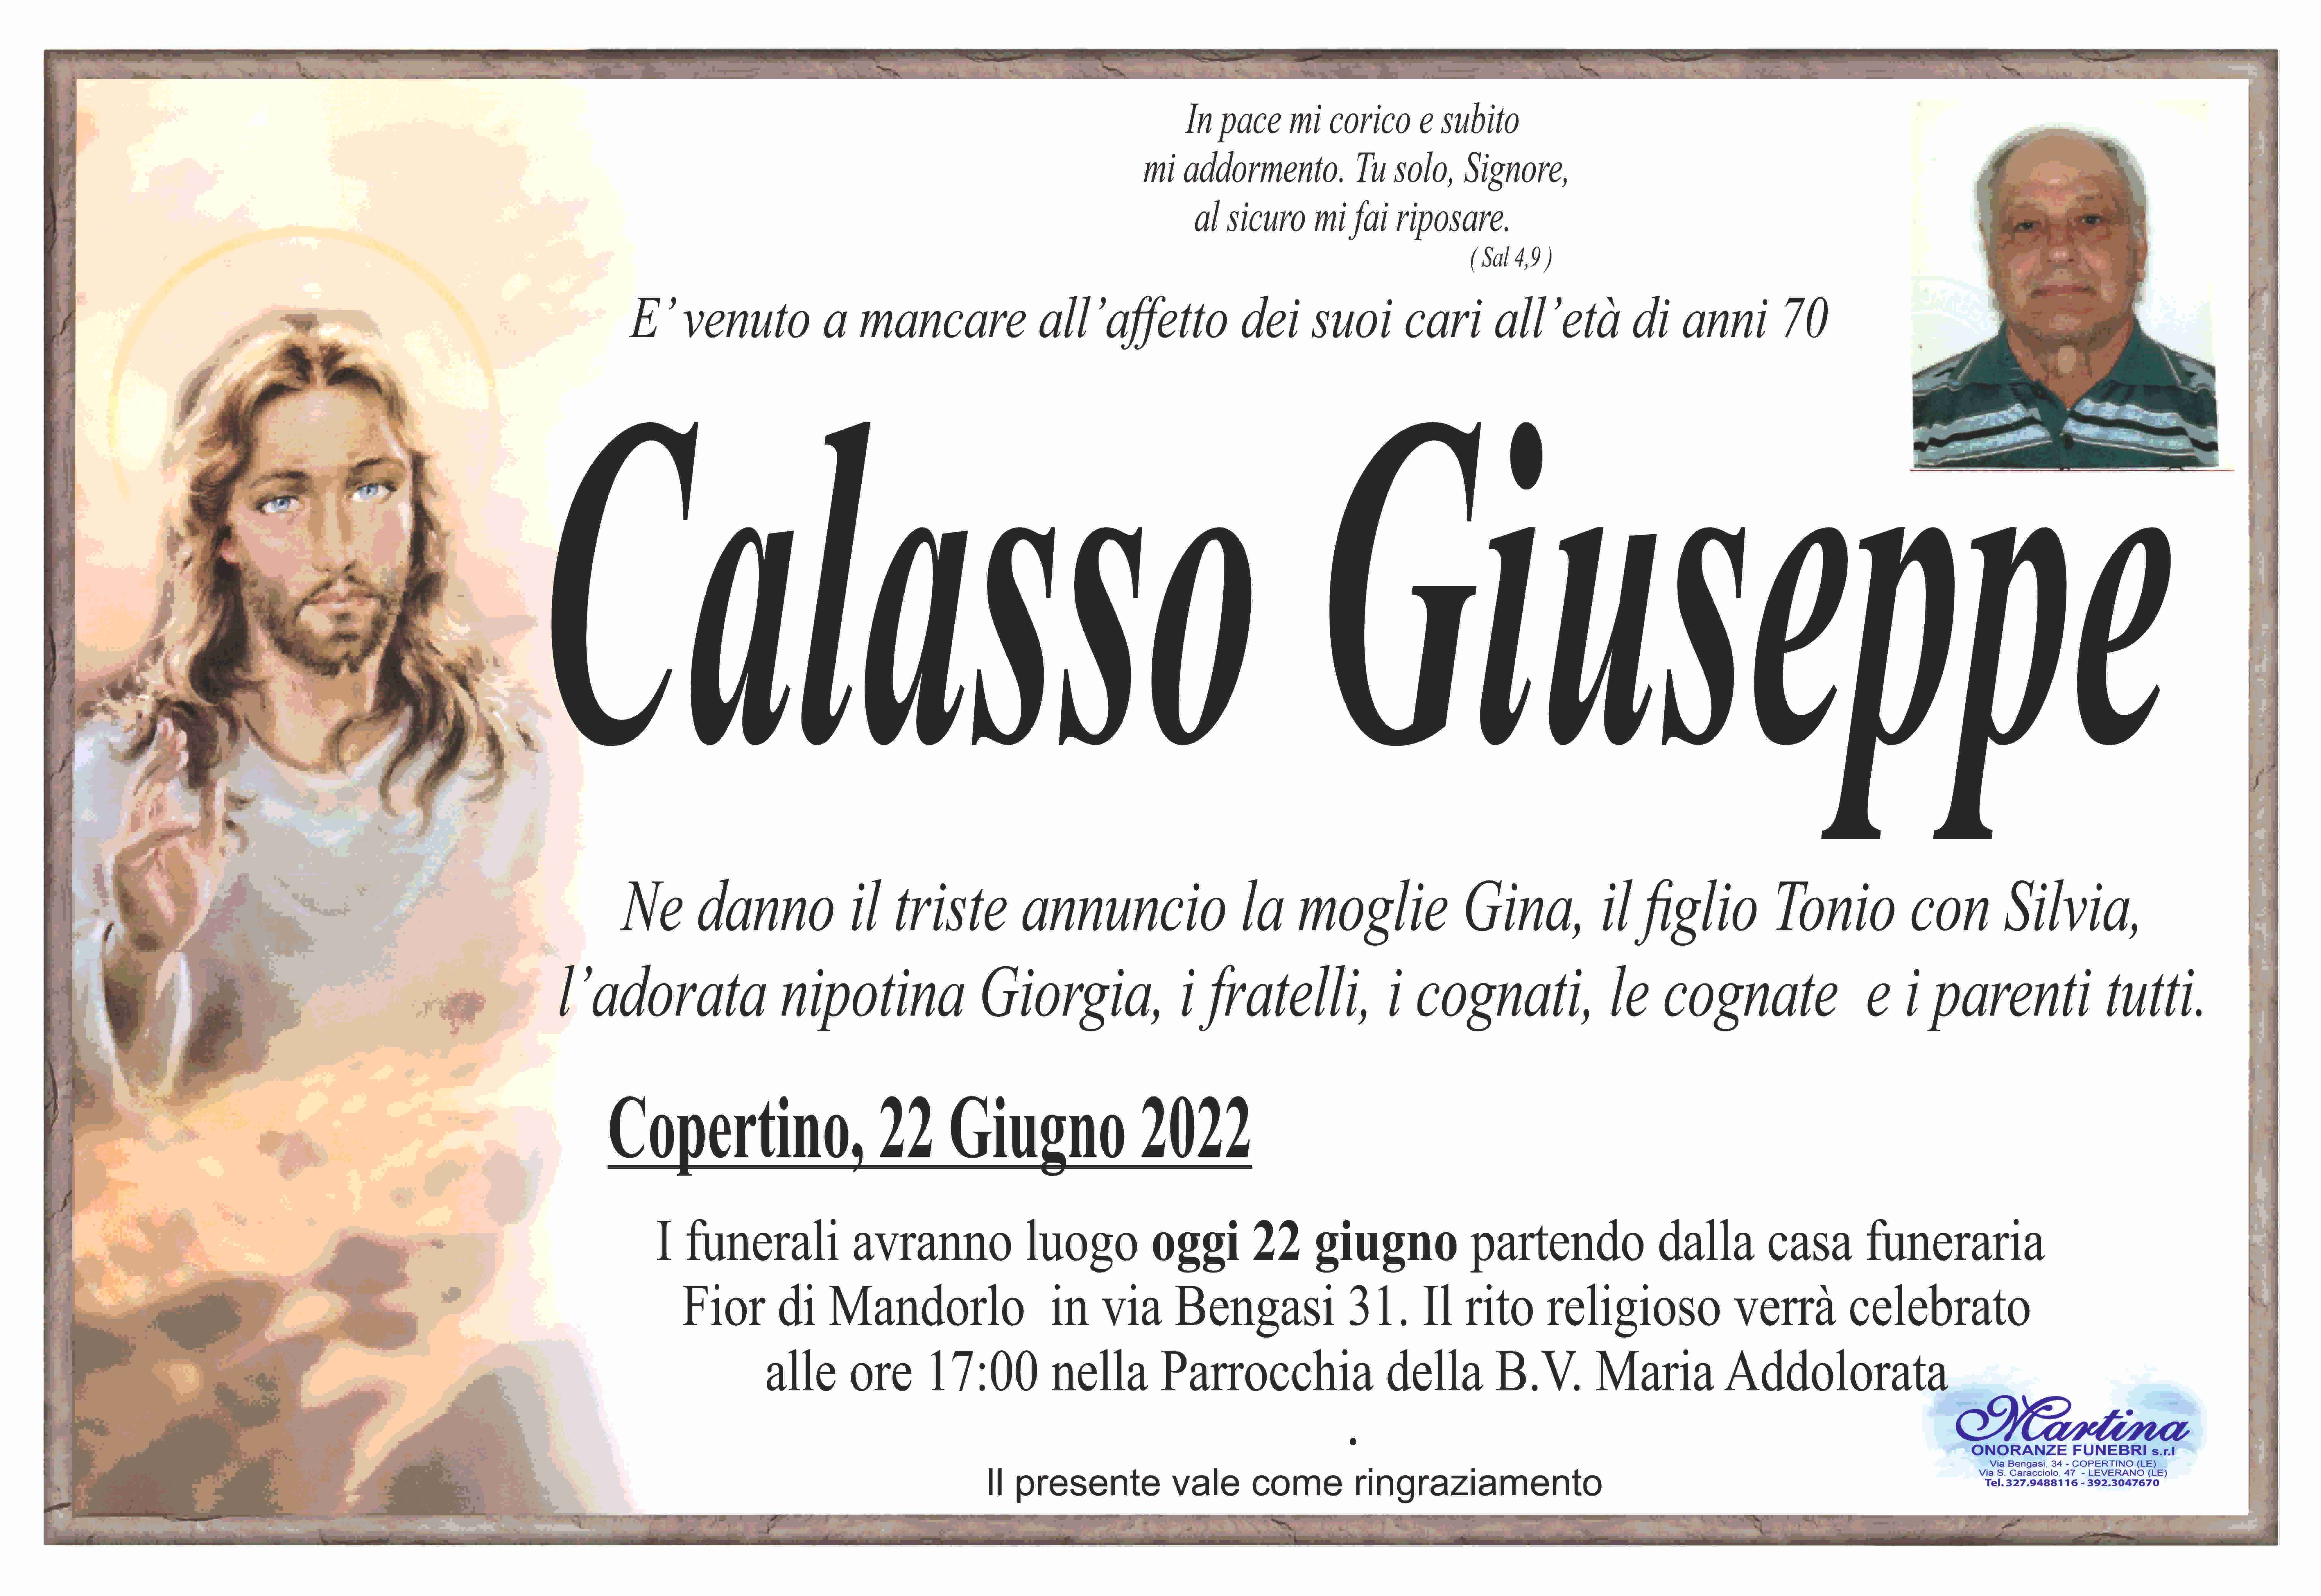 Giuseppe Calasso